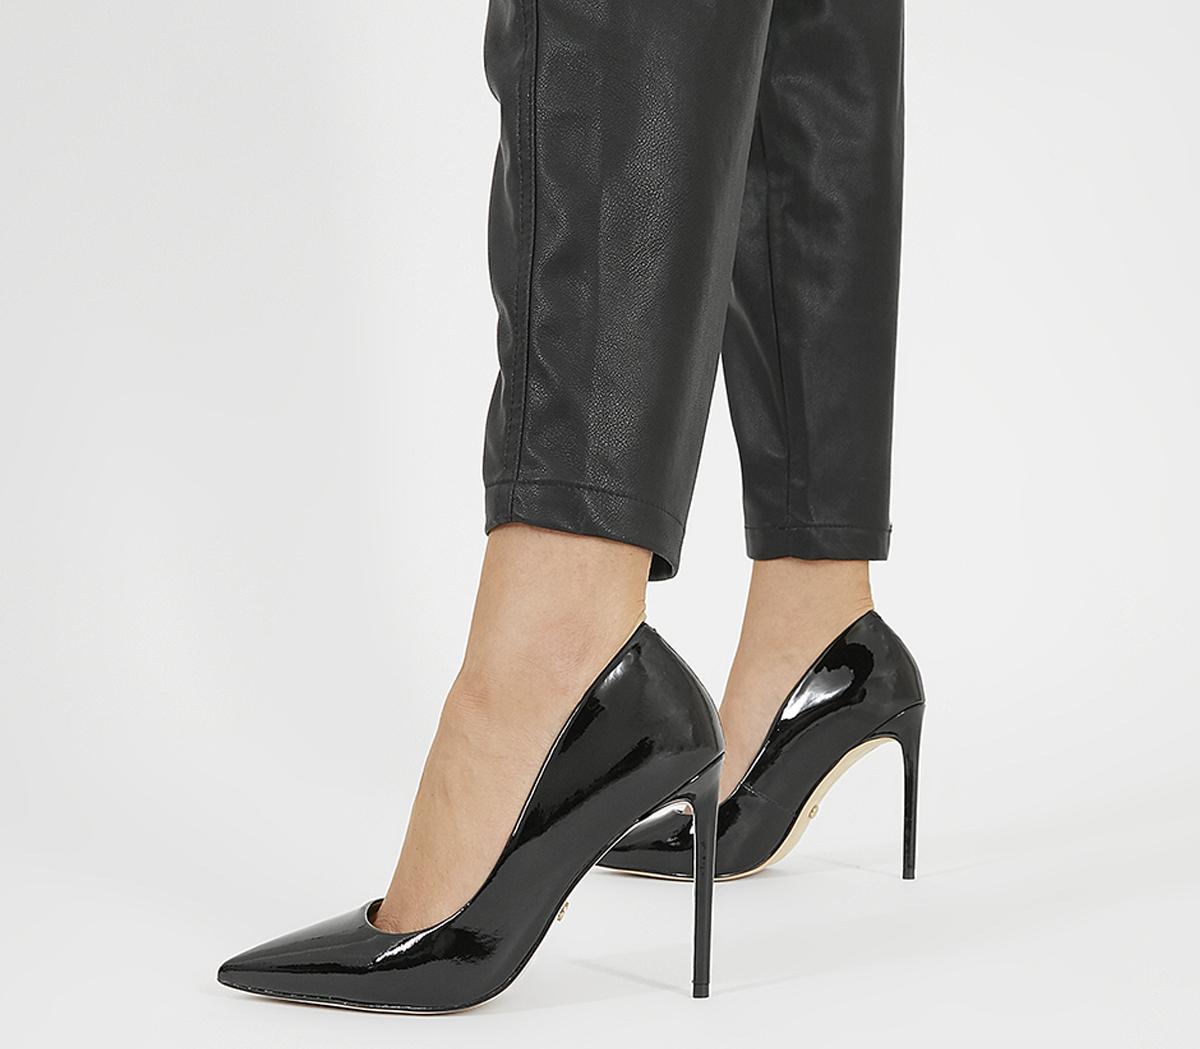 black patent leather stiletto heels